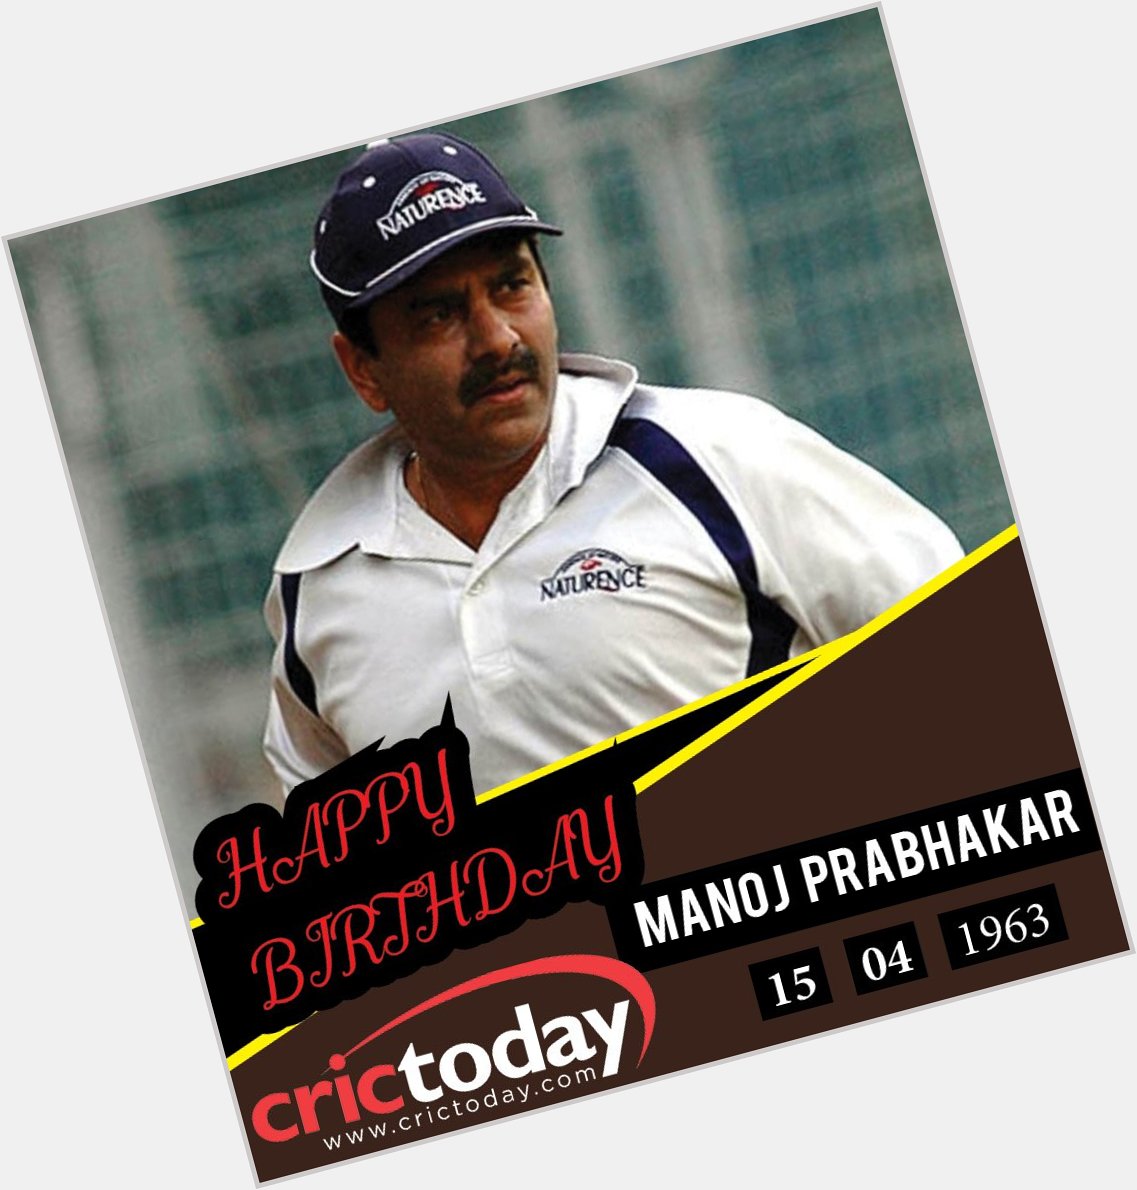  Happy Birthday Manoj Prabhakar 